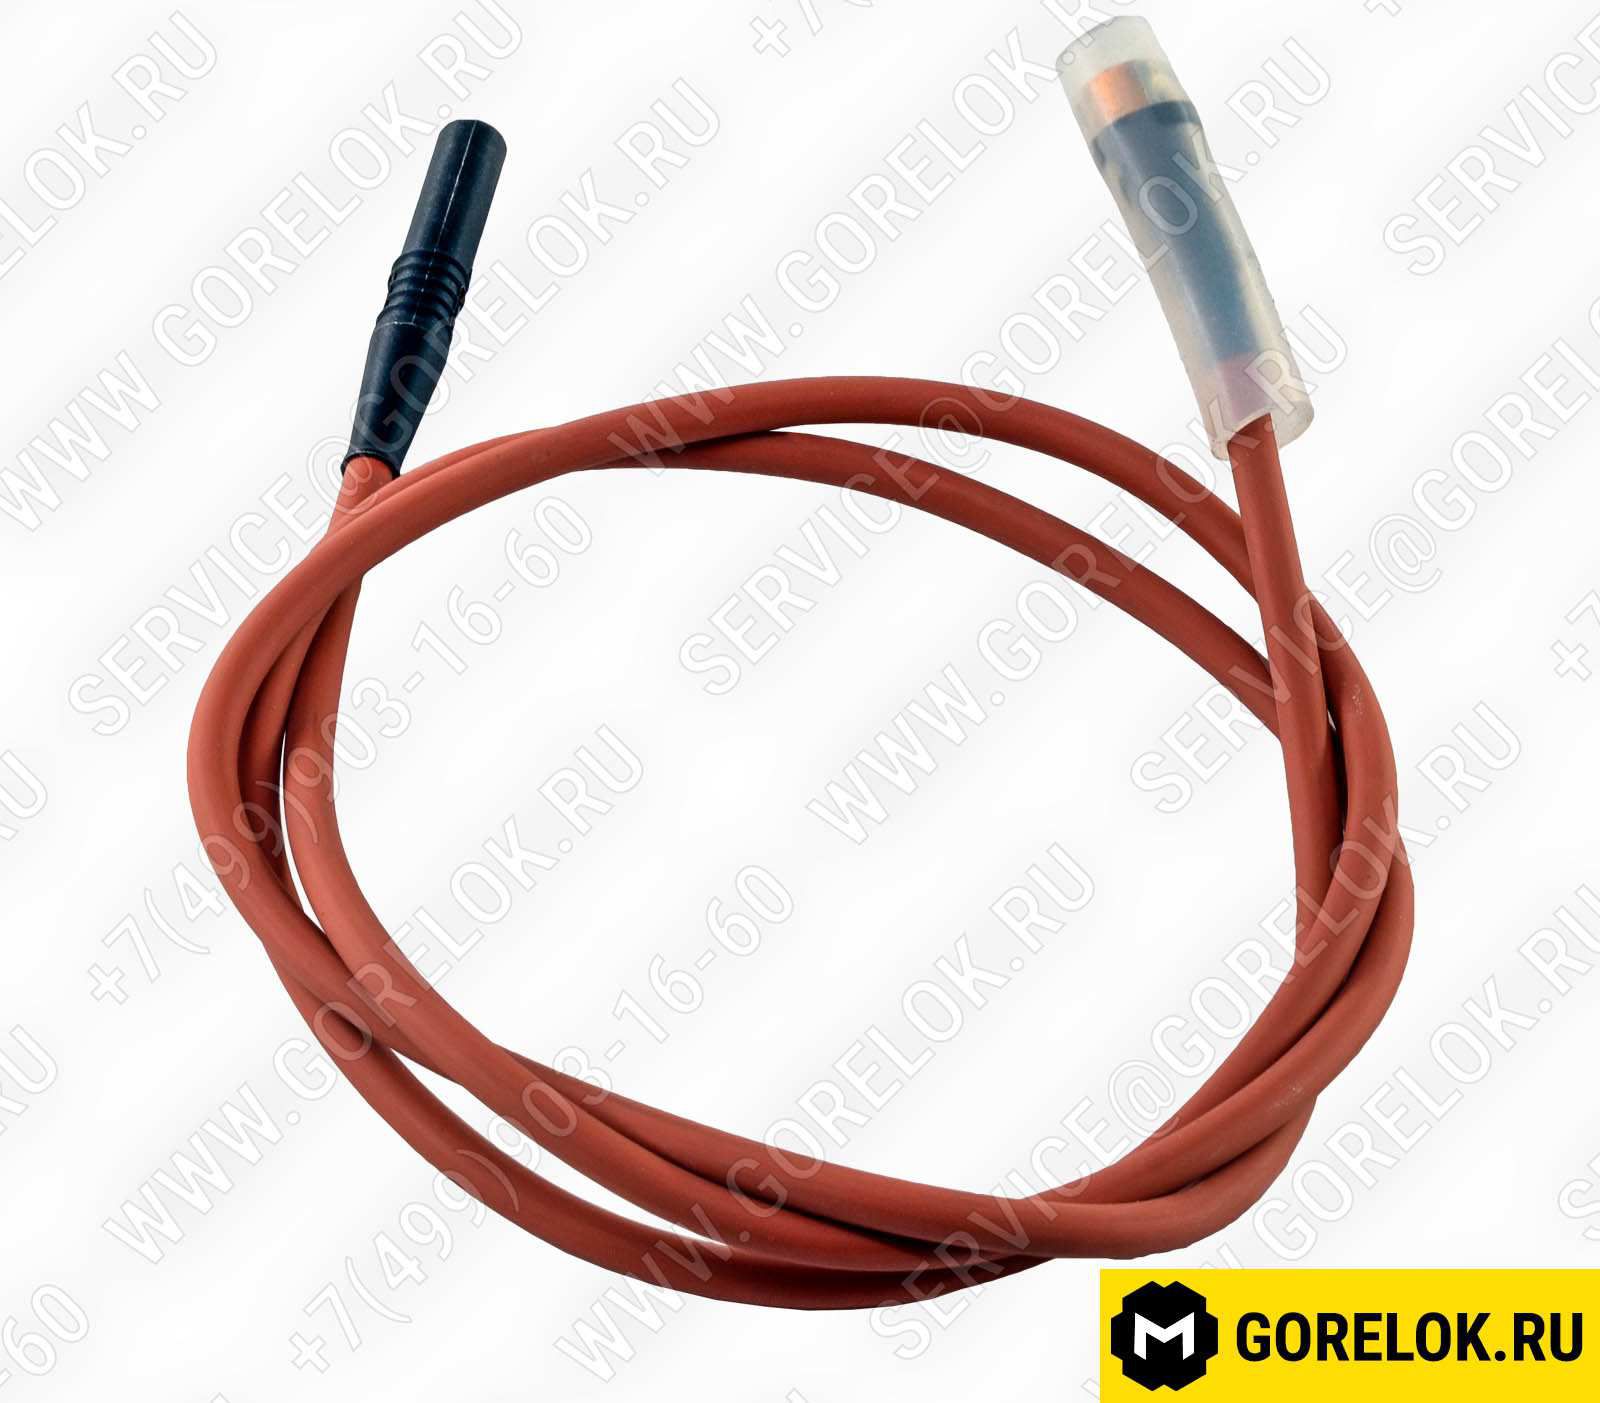 130096284 Реле давления: Реле давления DUNGS LGW 10 A2 с кабелем 750 мм